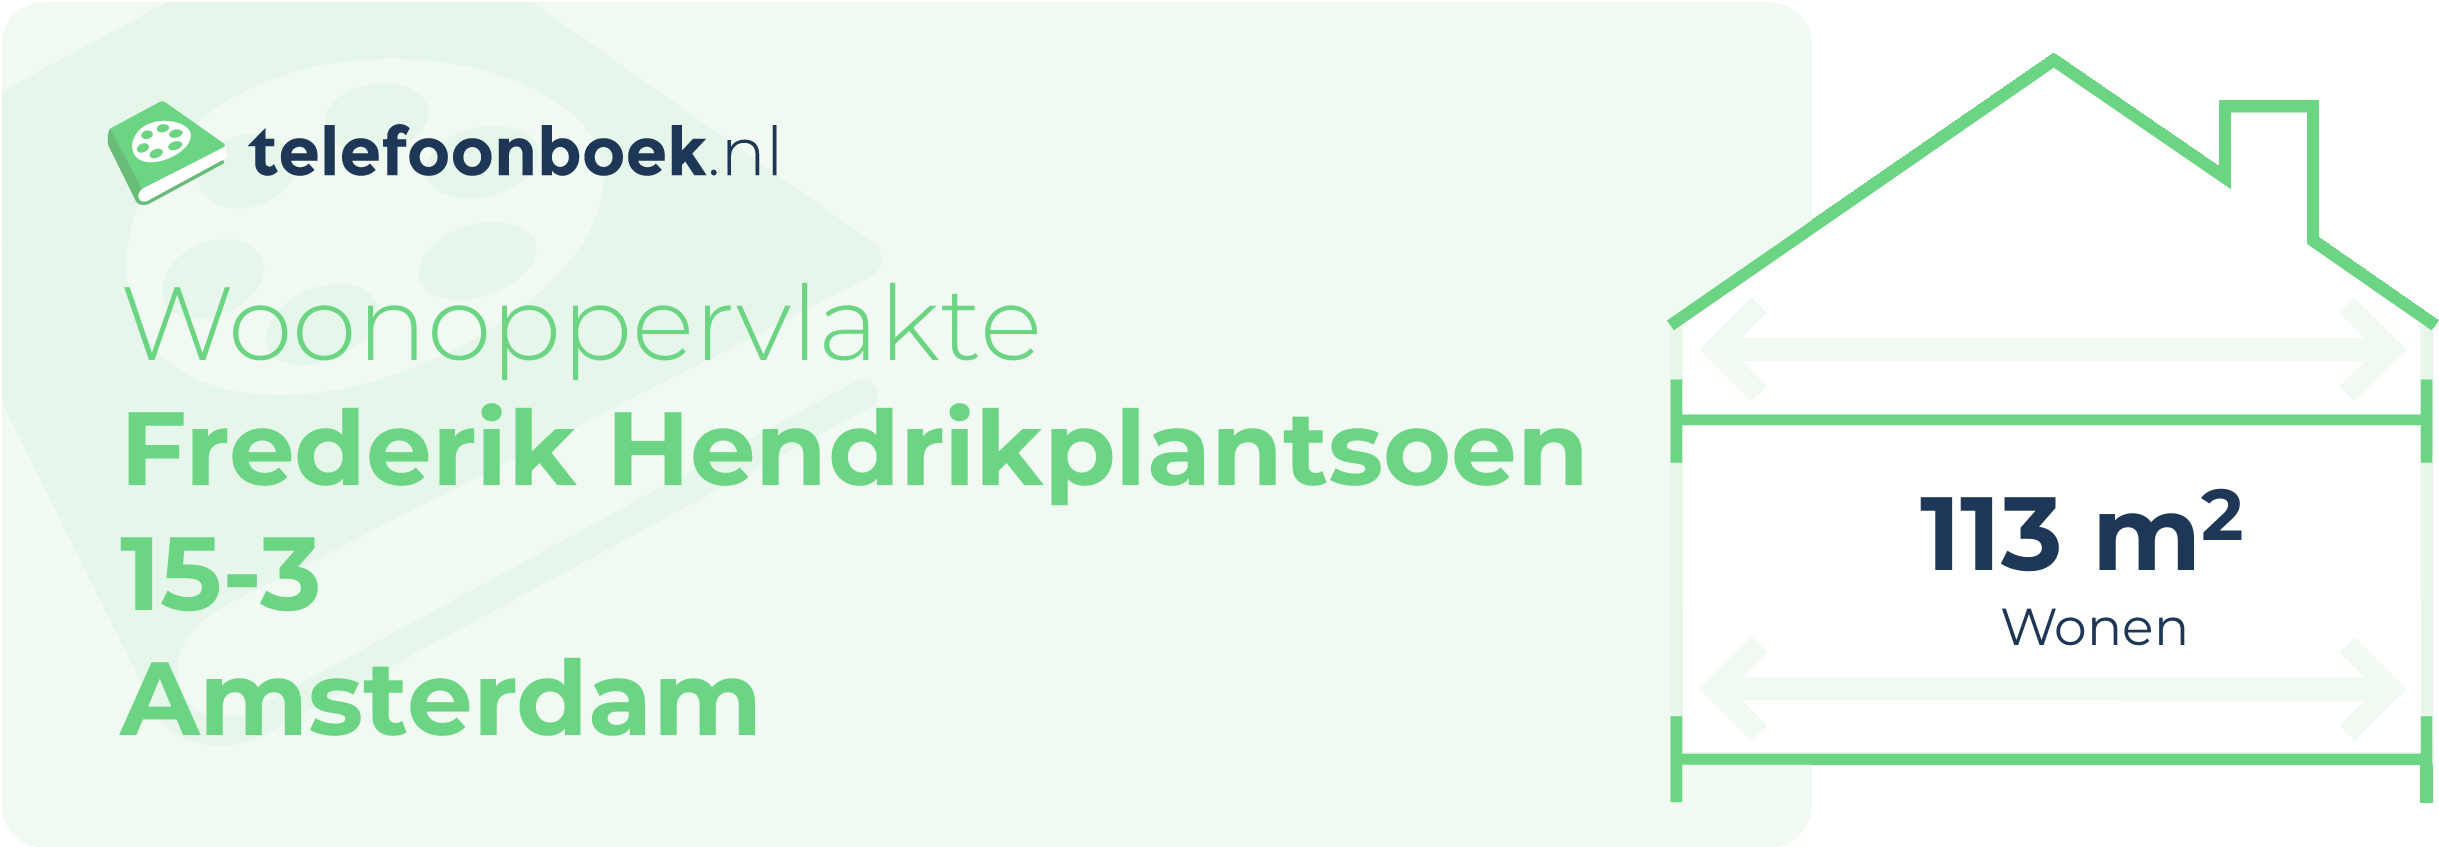 Woonoppervlakte Frederik Hendrikplantsoen 15-3 Amsterdam